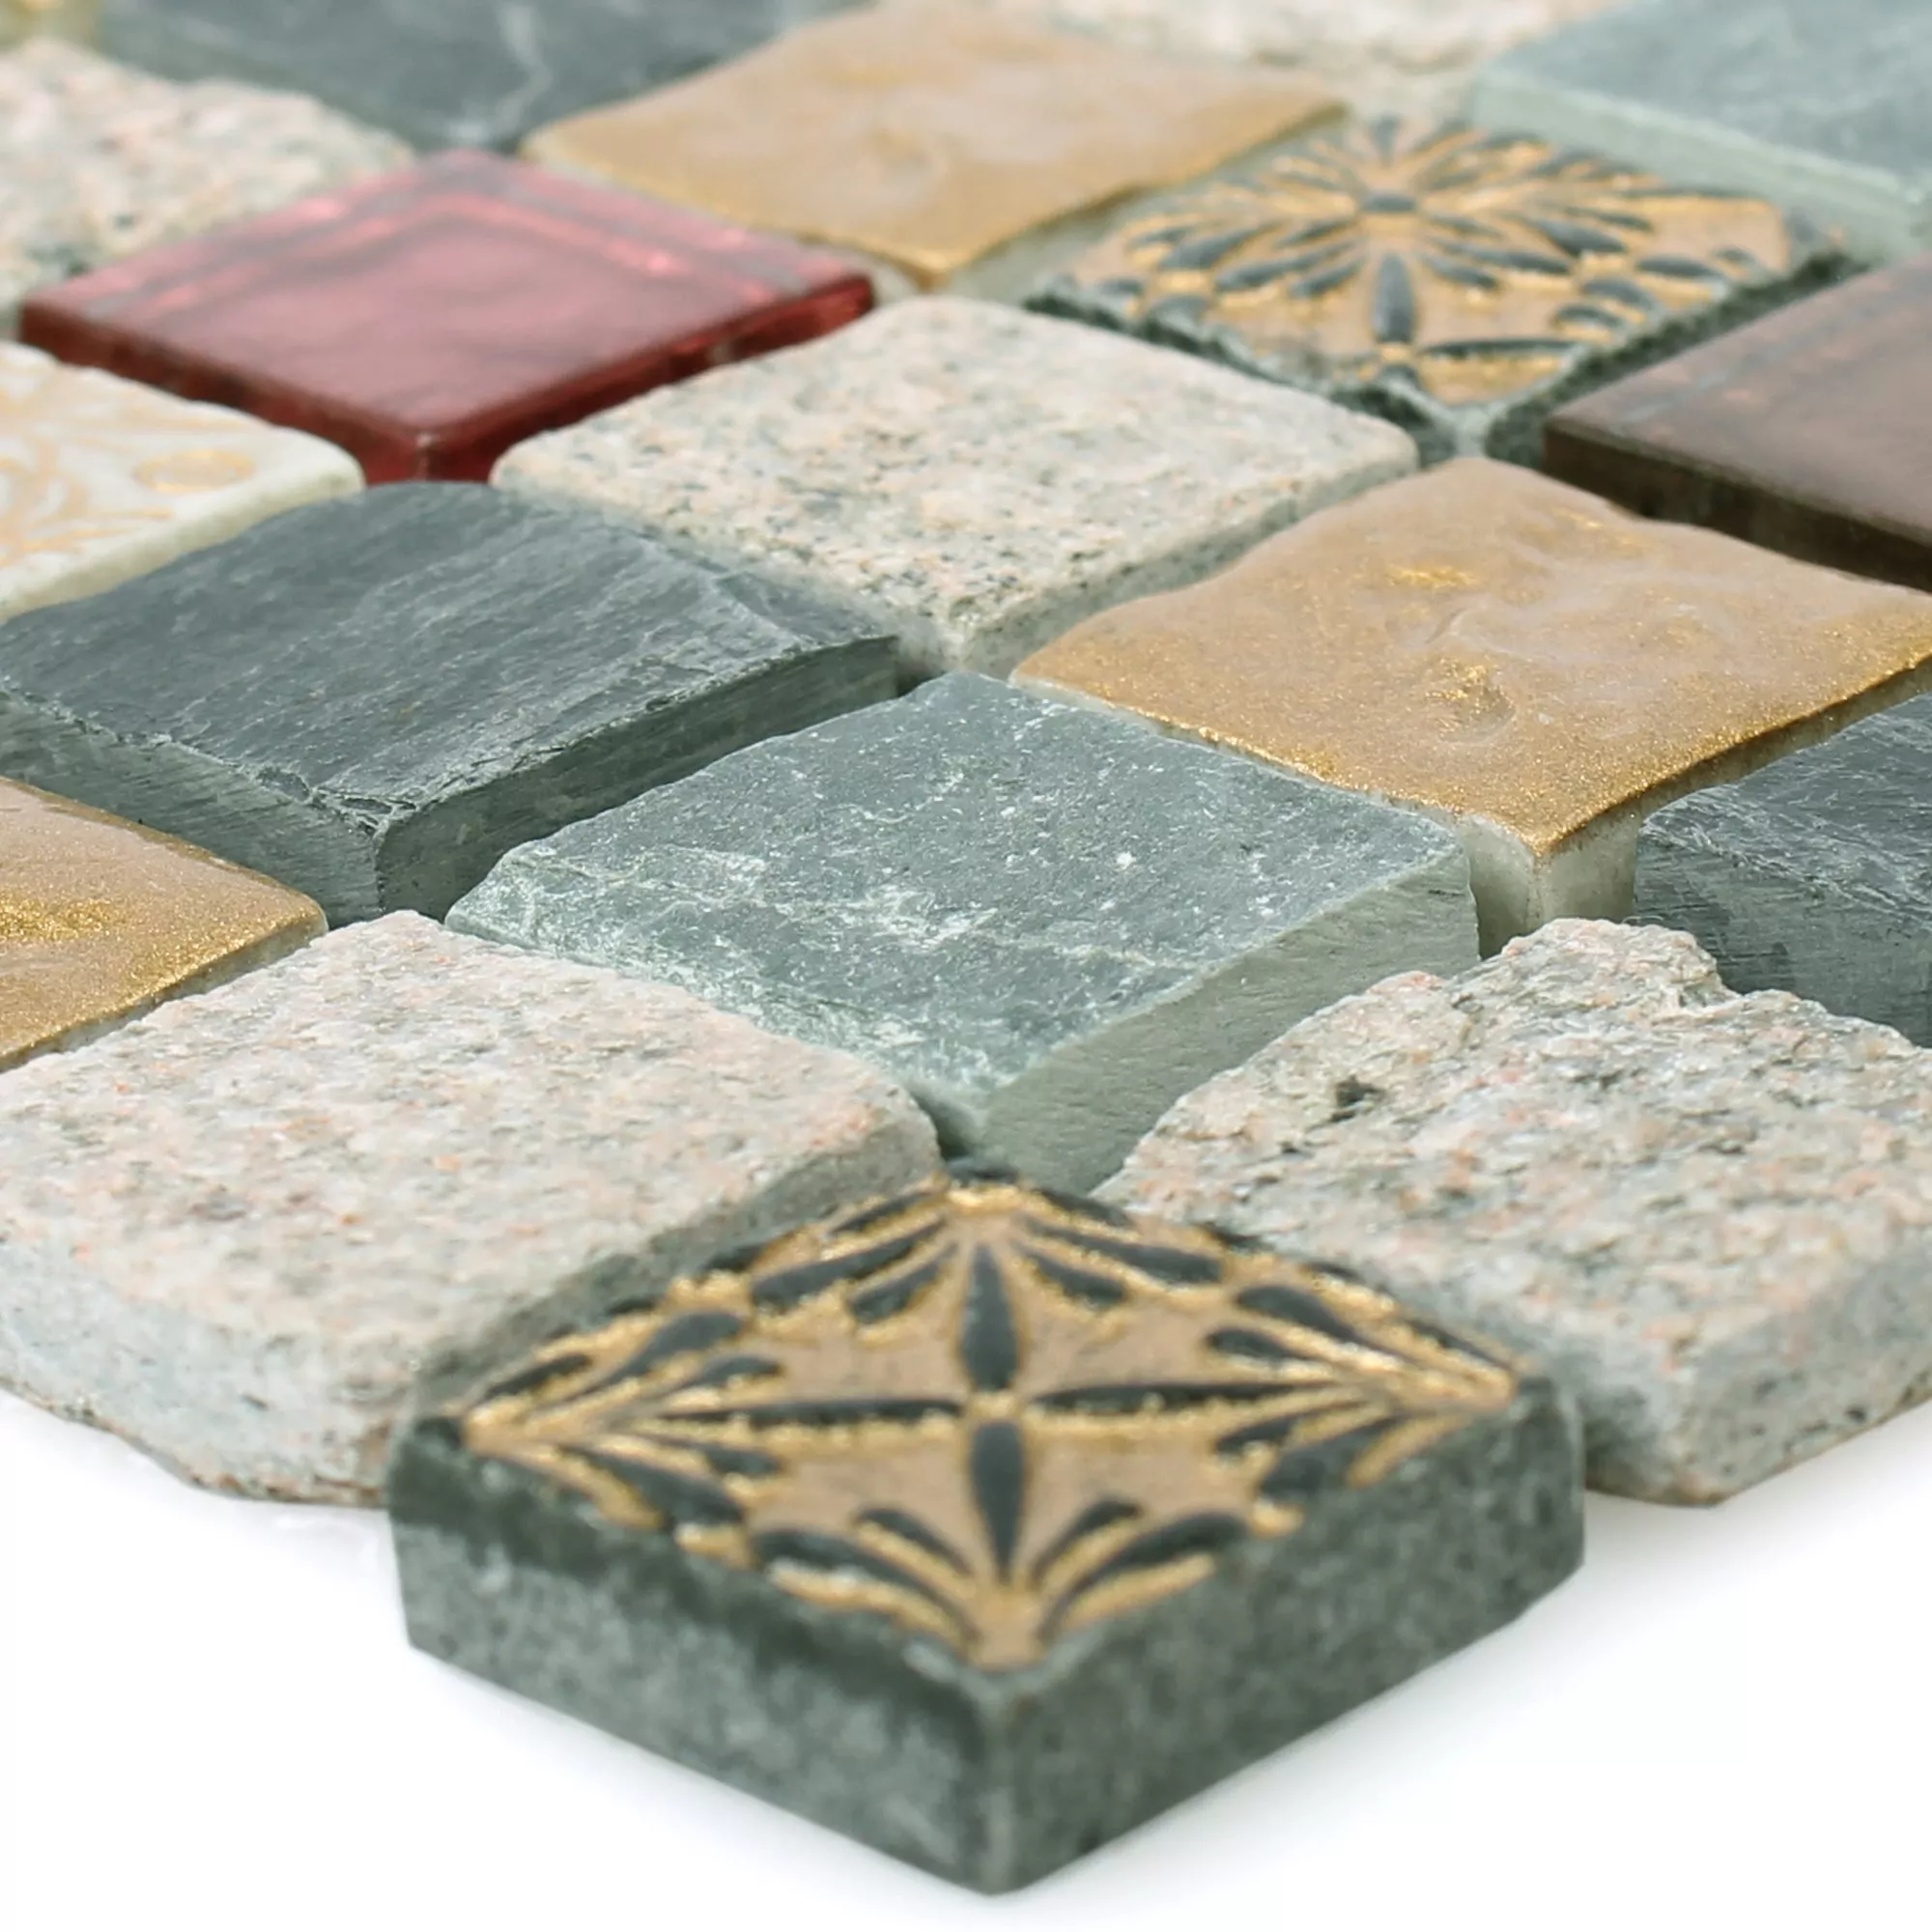 Sample Mosaic Tiles Glass Natural Stone Mix Sulluna Gold Grey